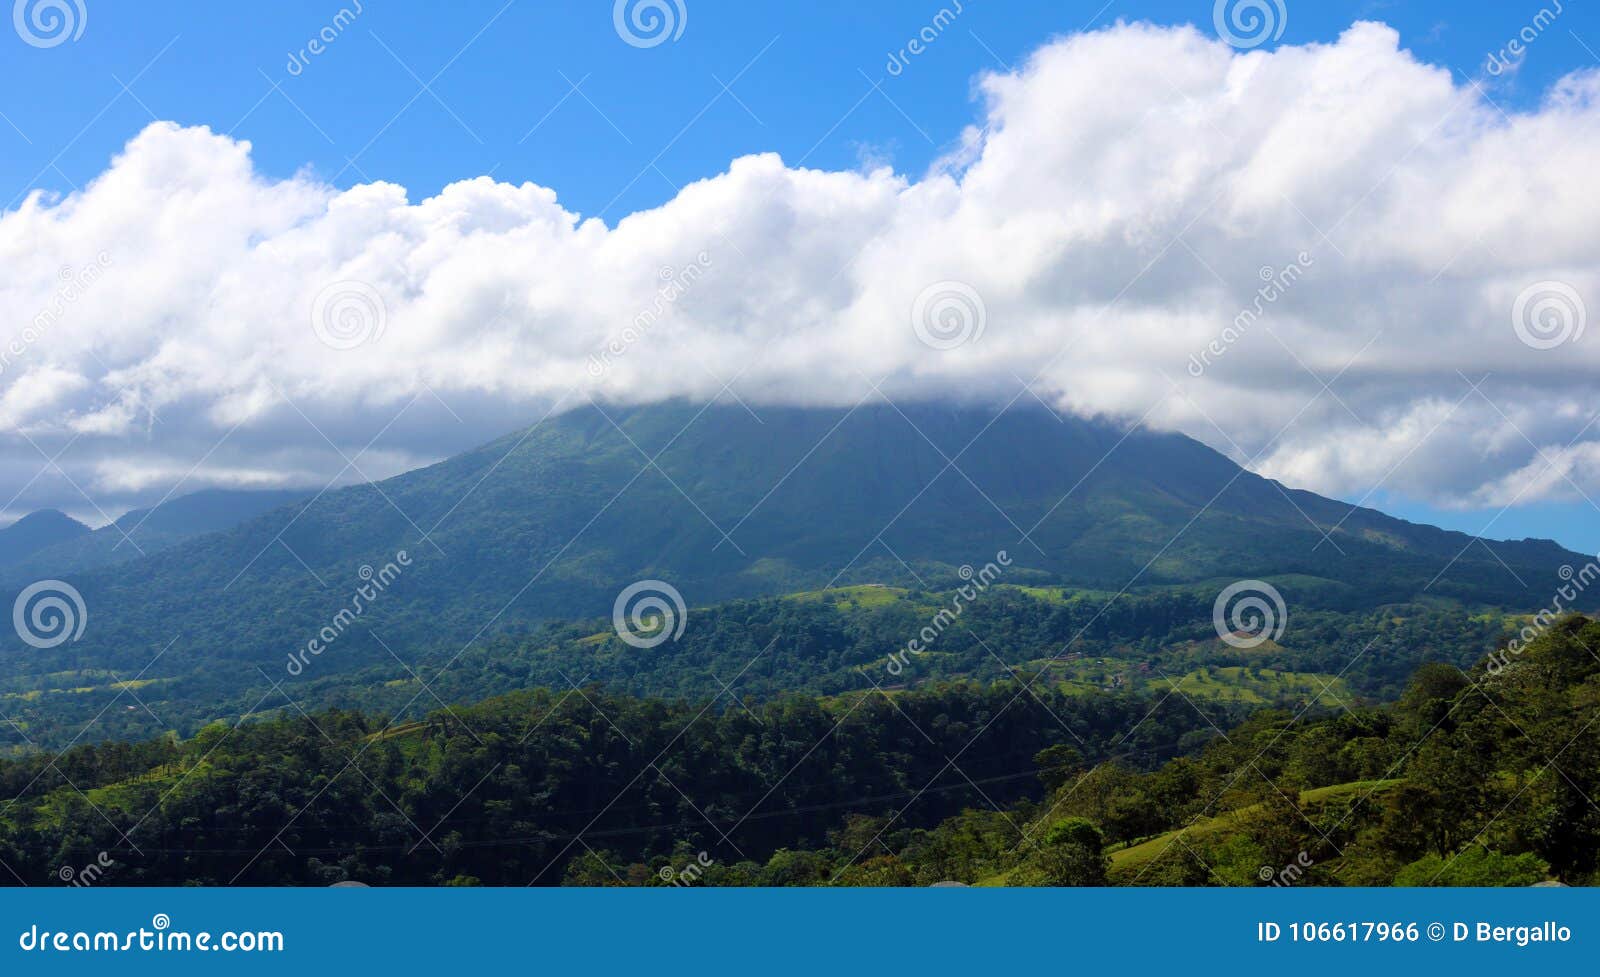 arenal jungle volcano in costa rica central america volcan active